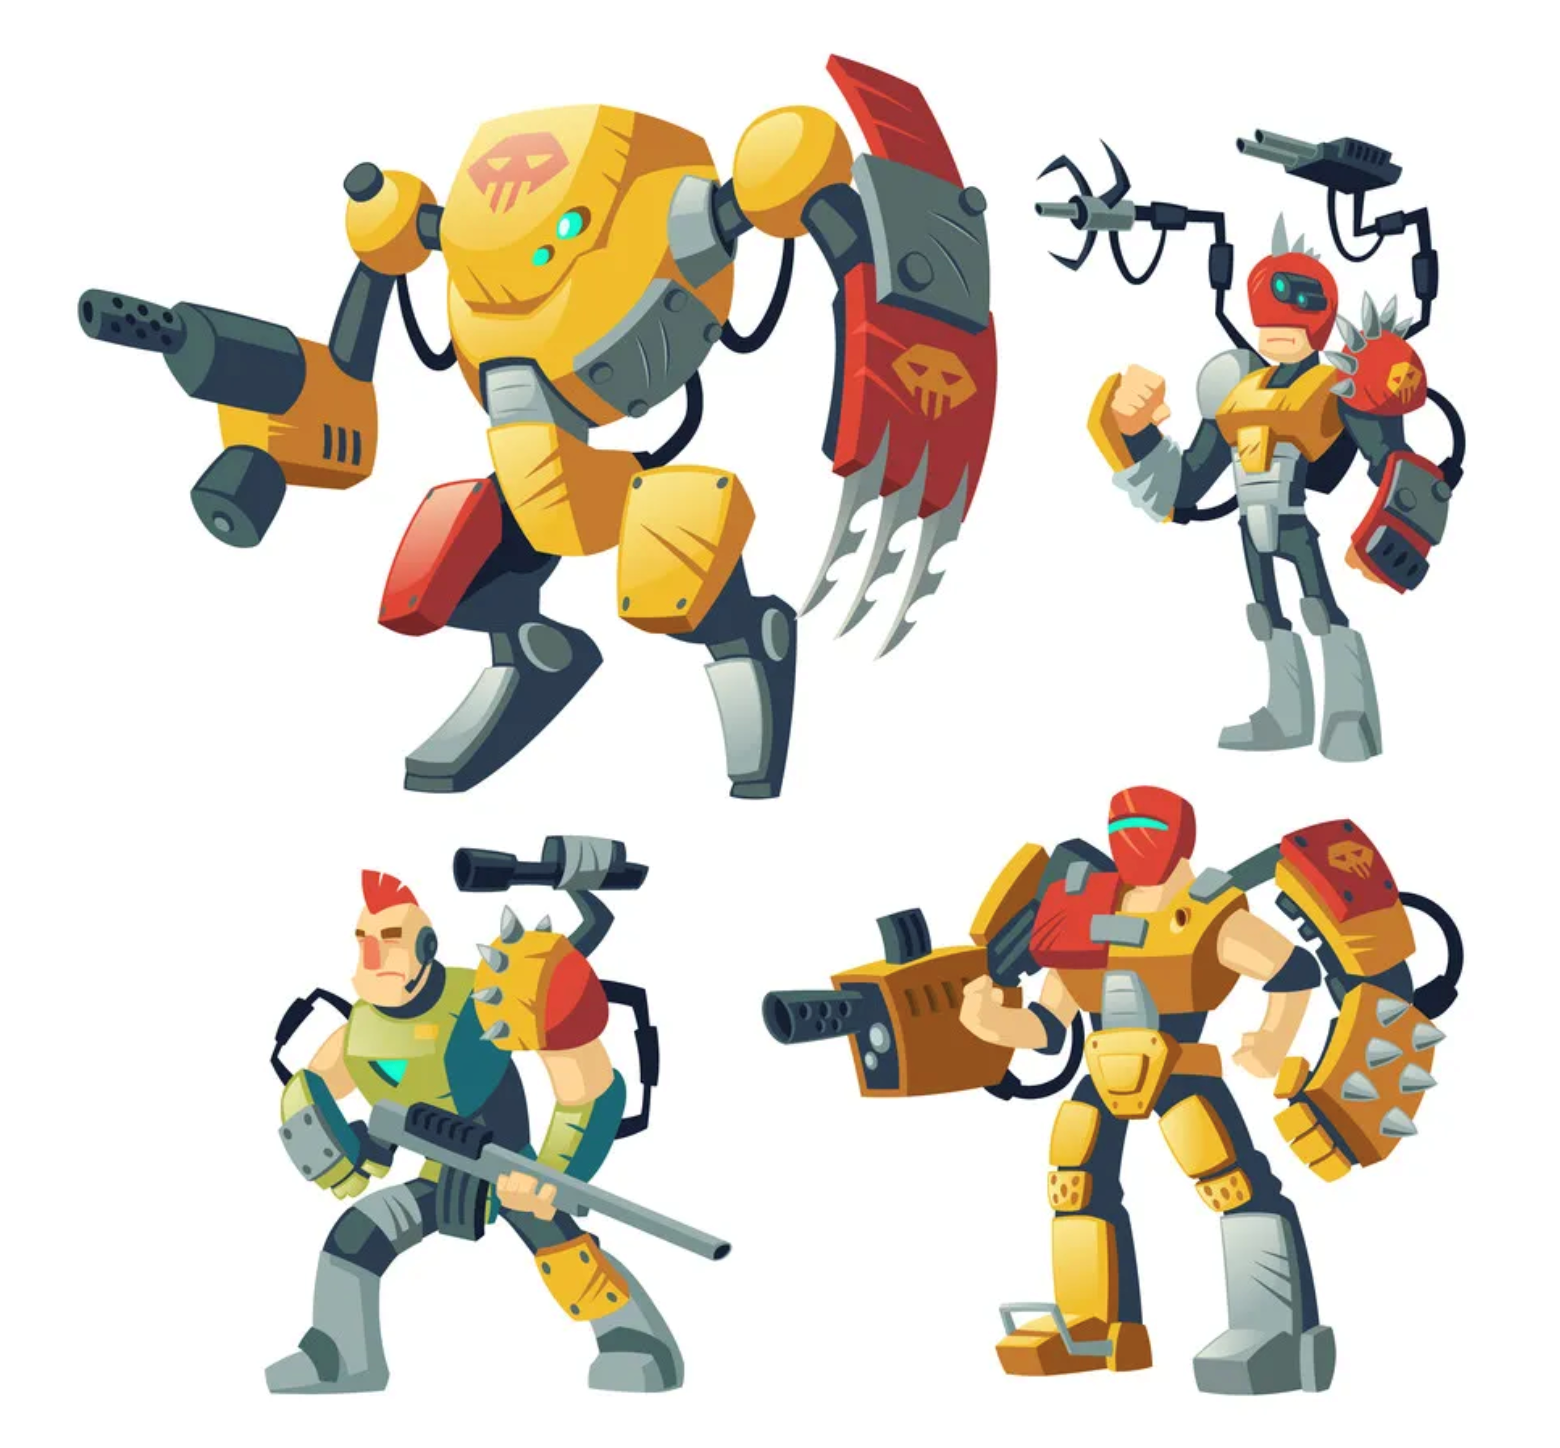 Fantastic, cartoon-like exoskeletonsSource: VectorStock (https://www.vectorstock.com/royalty-free-vector/cartoon-robot-guards-futuristic-exoskeleton-armor-vector-38265581)